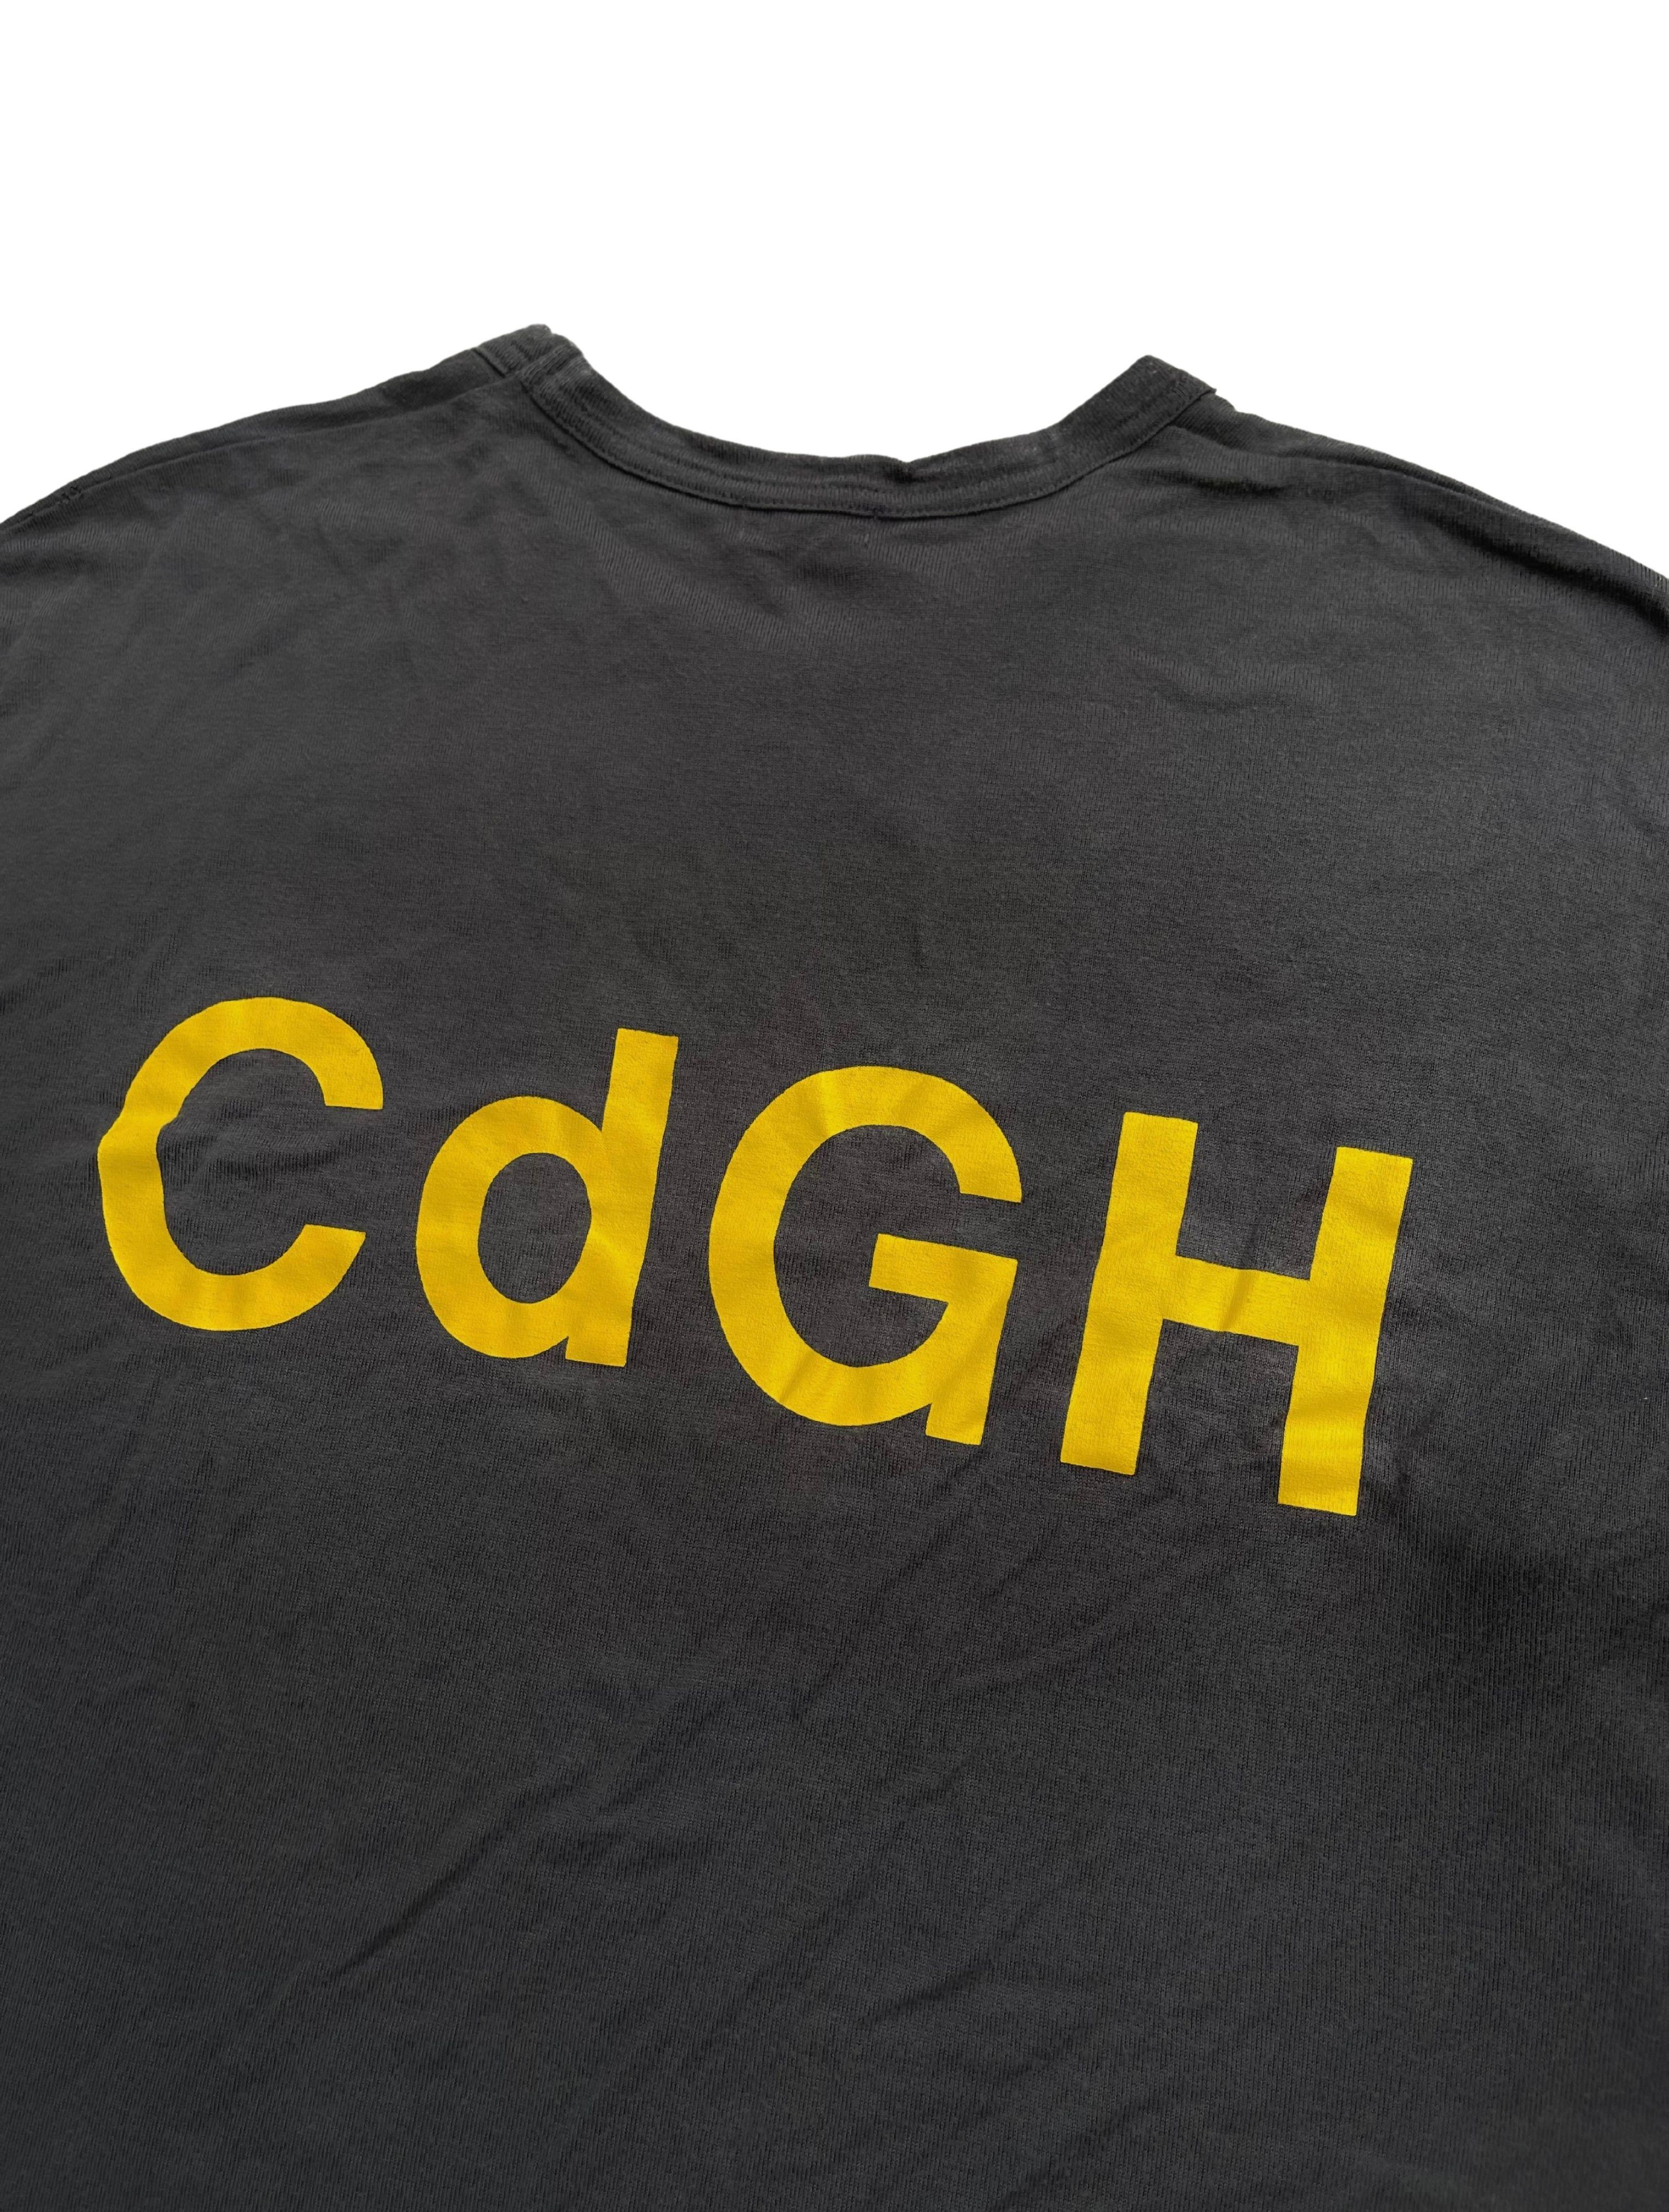 cdgh shirt